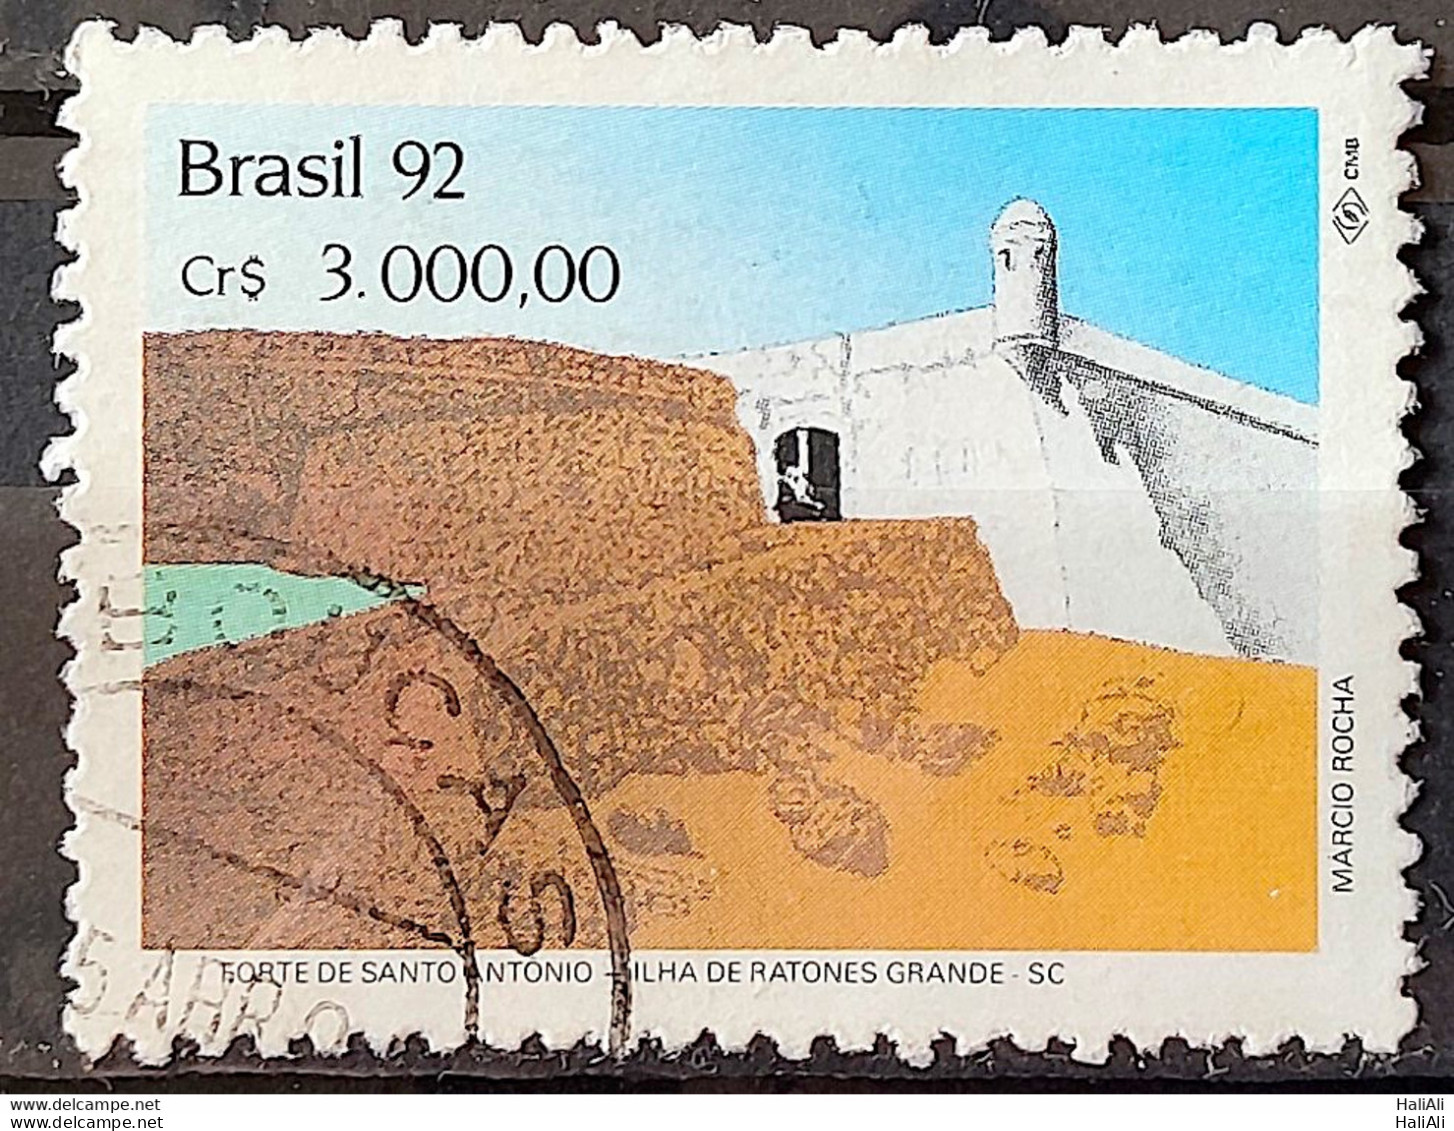 C 1816 Brazil Stamp Strong Military Architecture Big Ratone Island SC 1992 Circulated 1 - Gebruikt